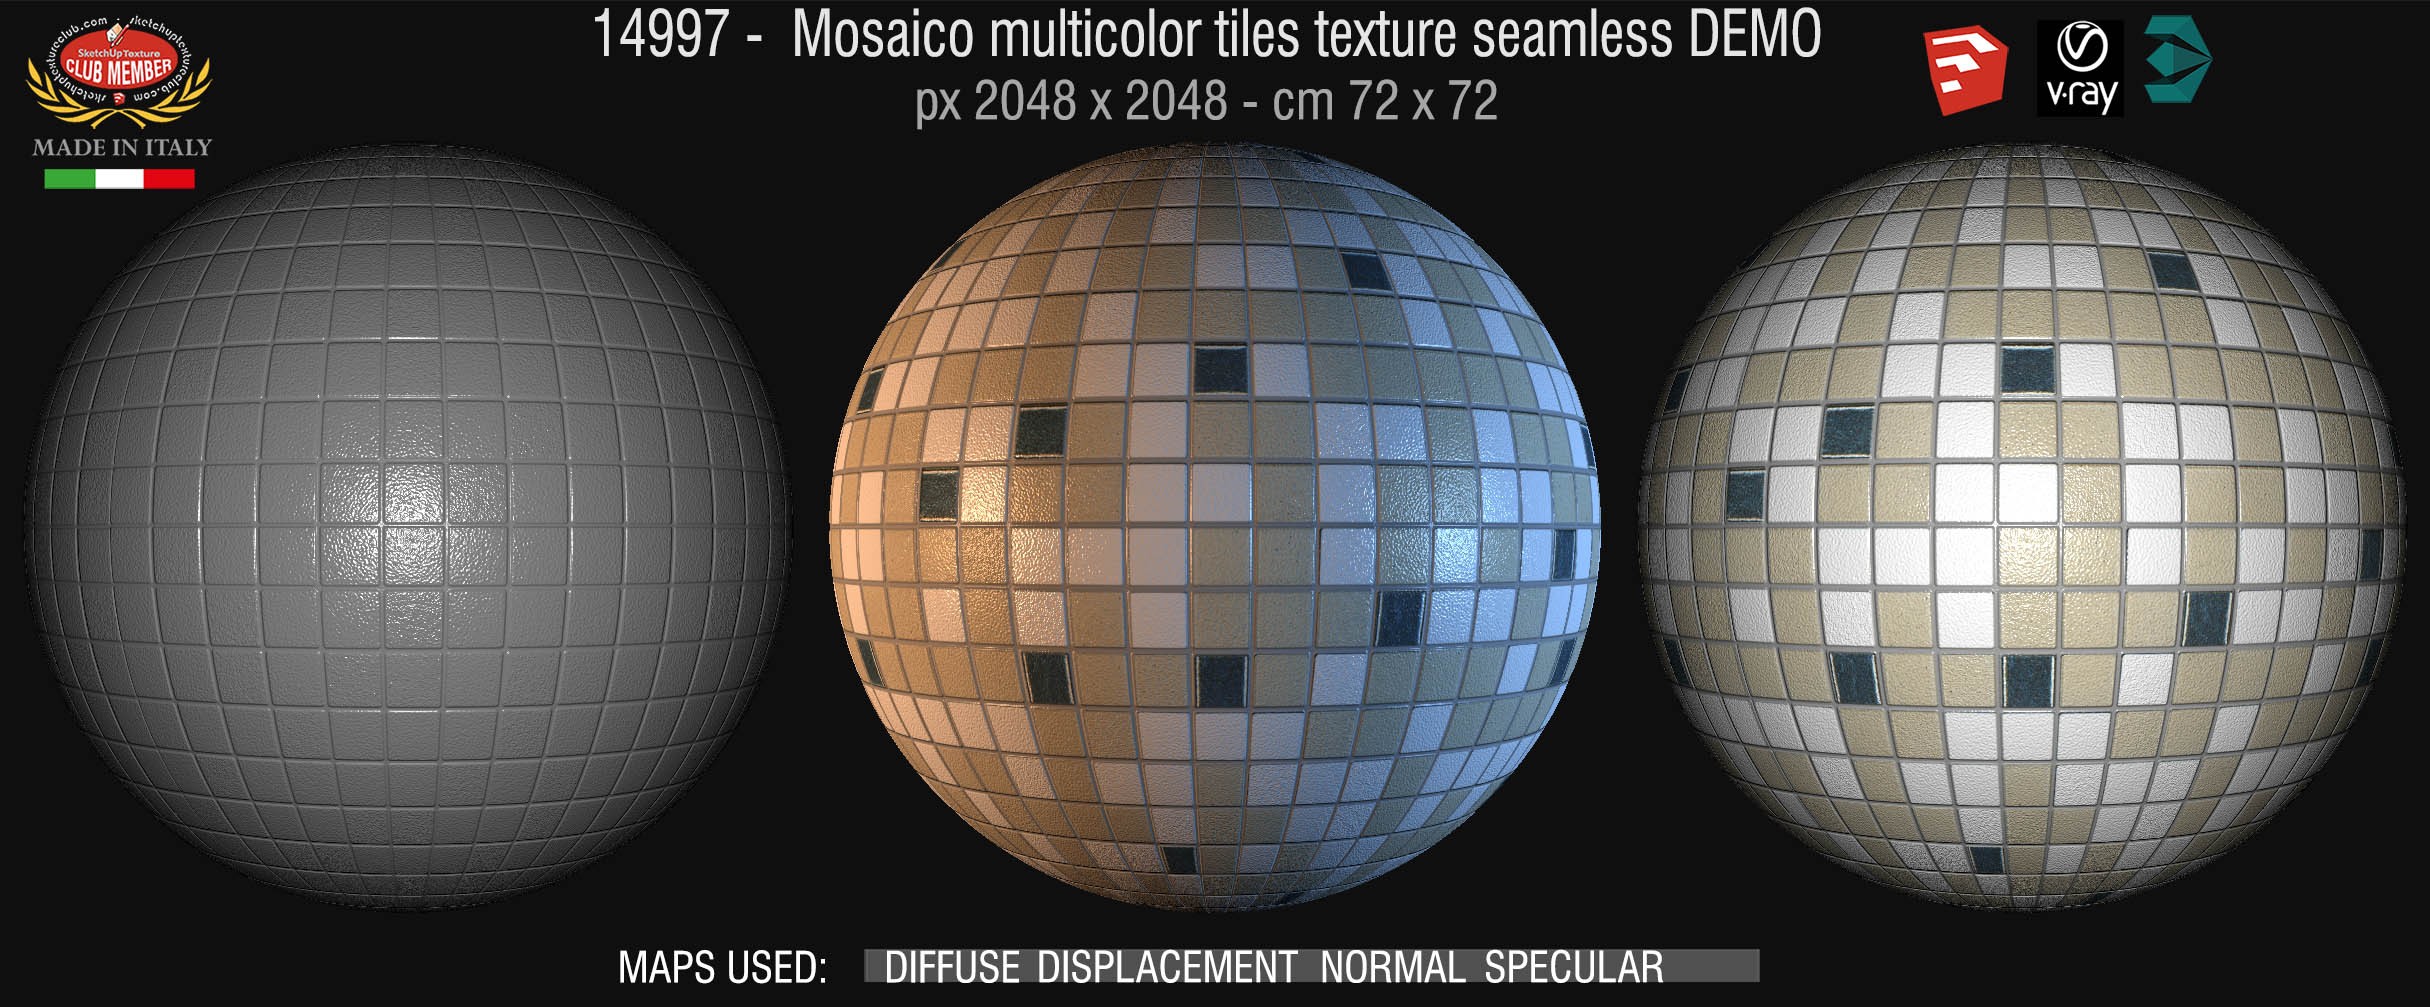 14997 Mosaico multicolor tiles texture seamless + maps DEMO